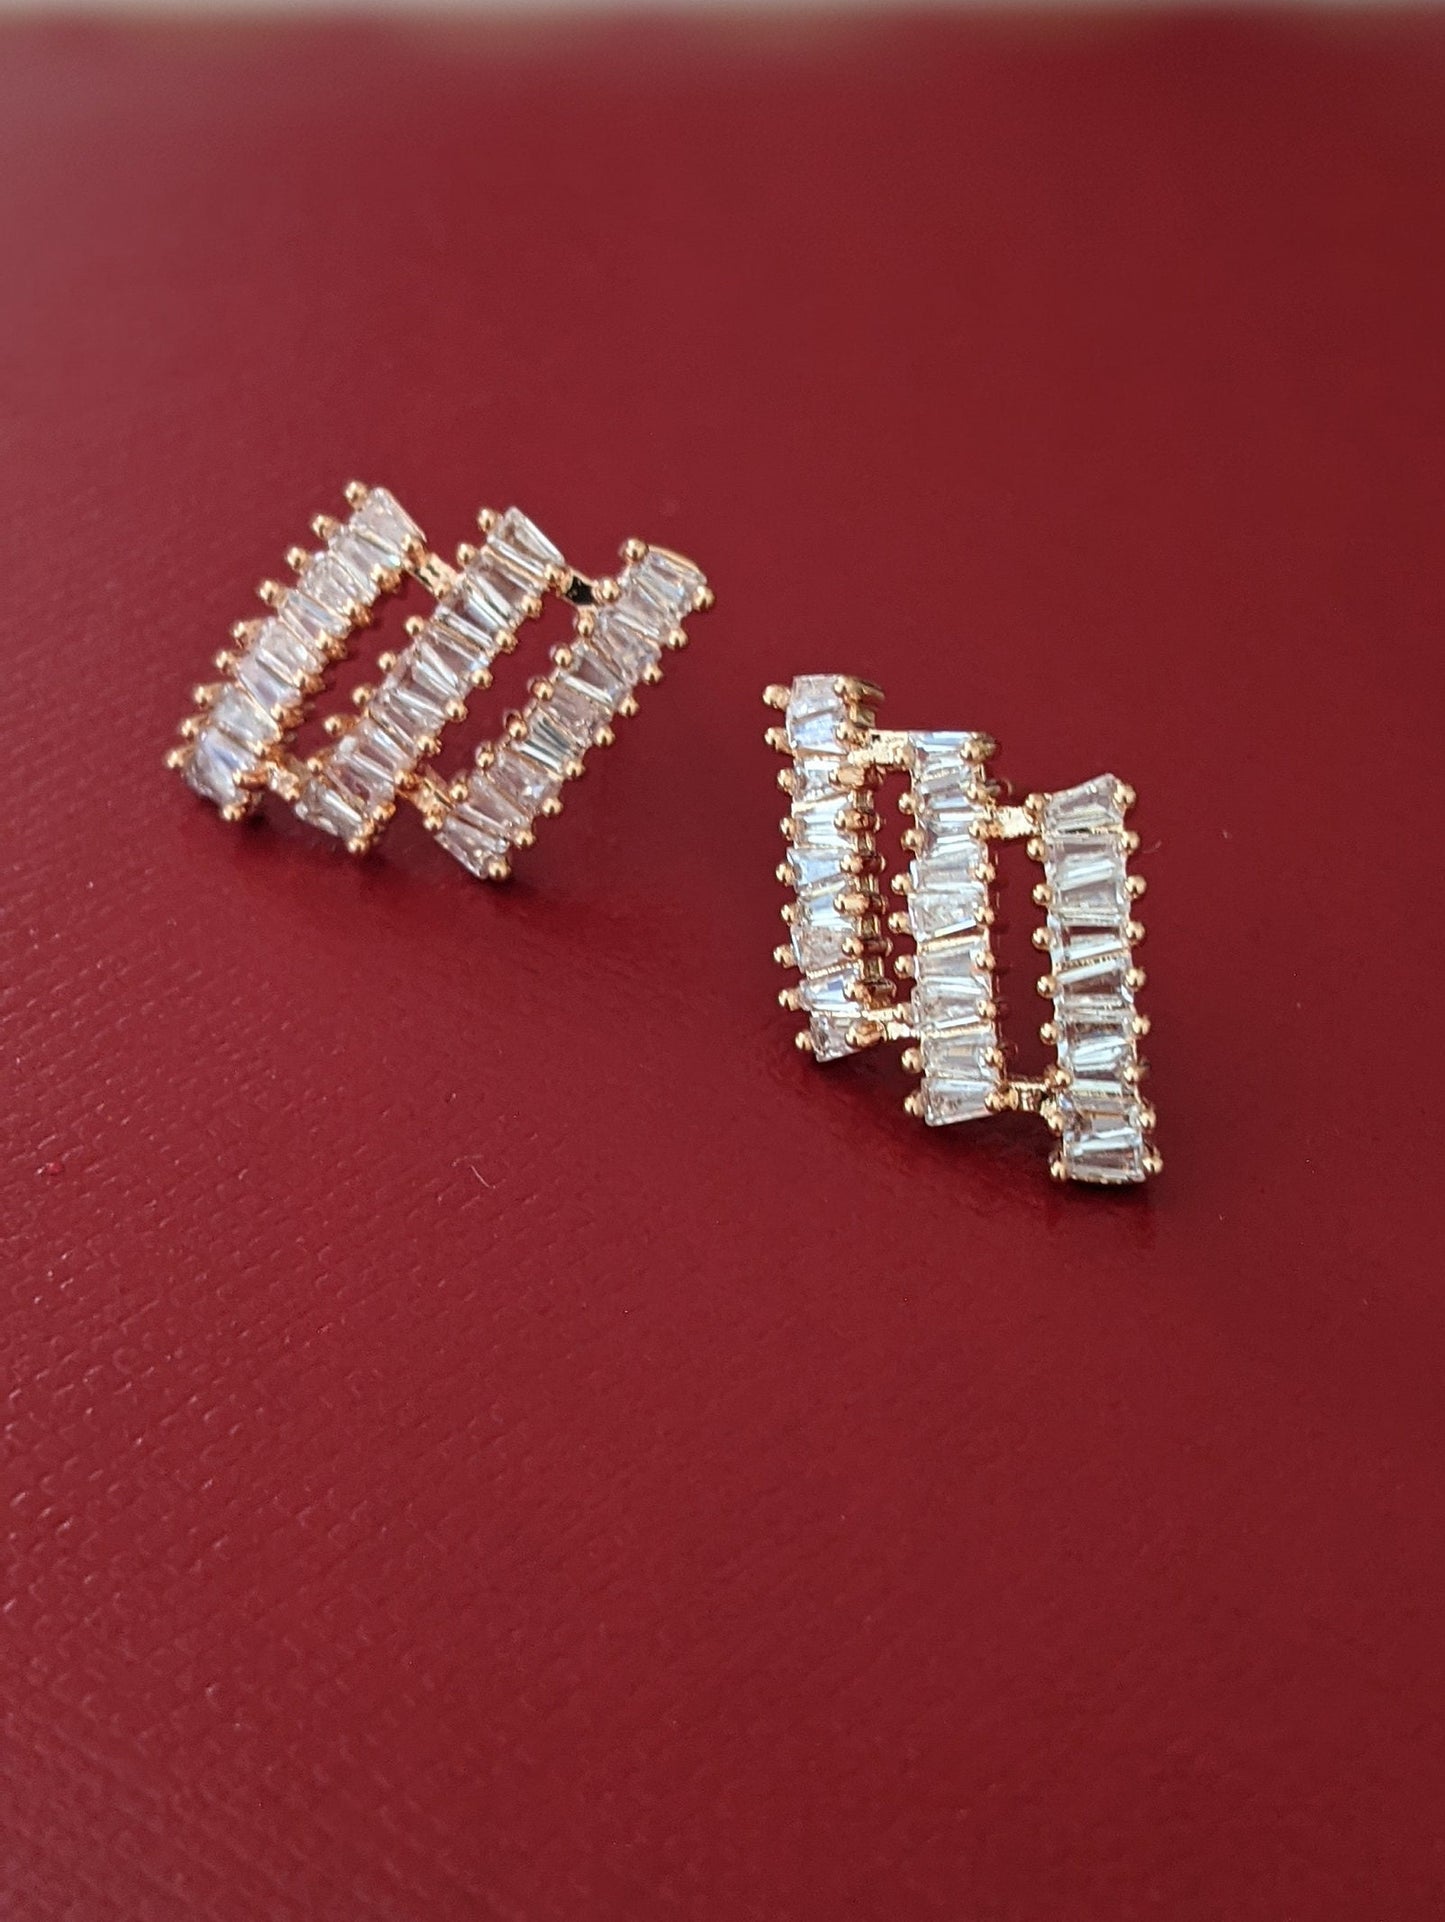 shiny gem jewel earrings for everyday use